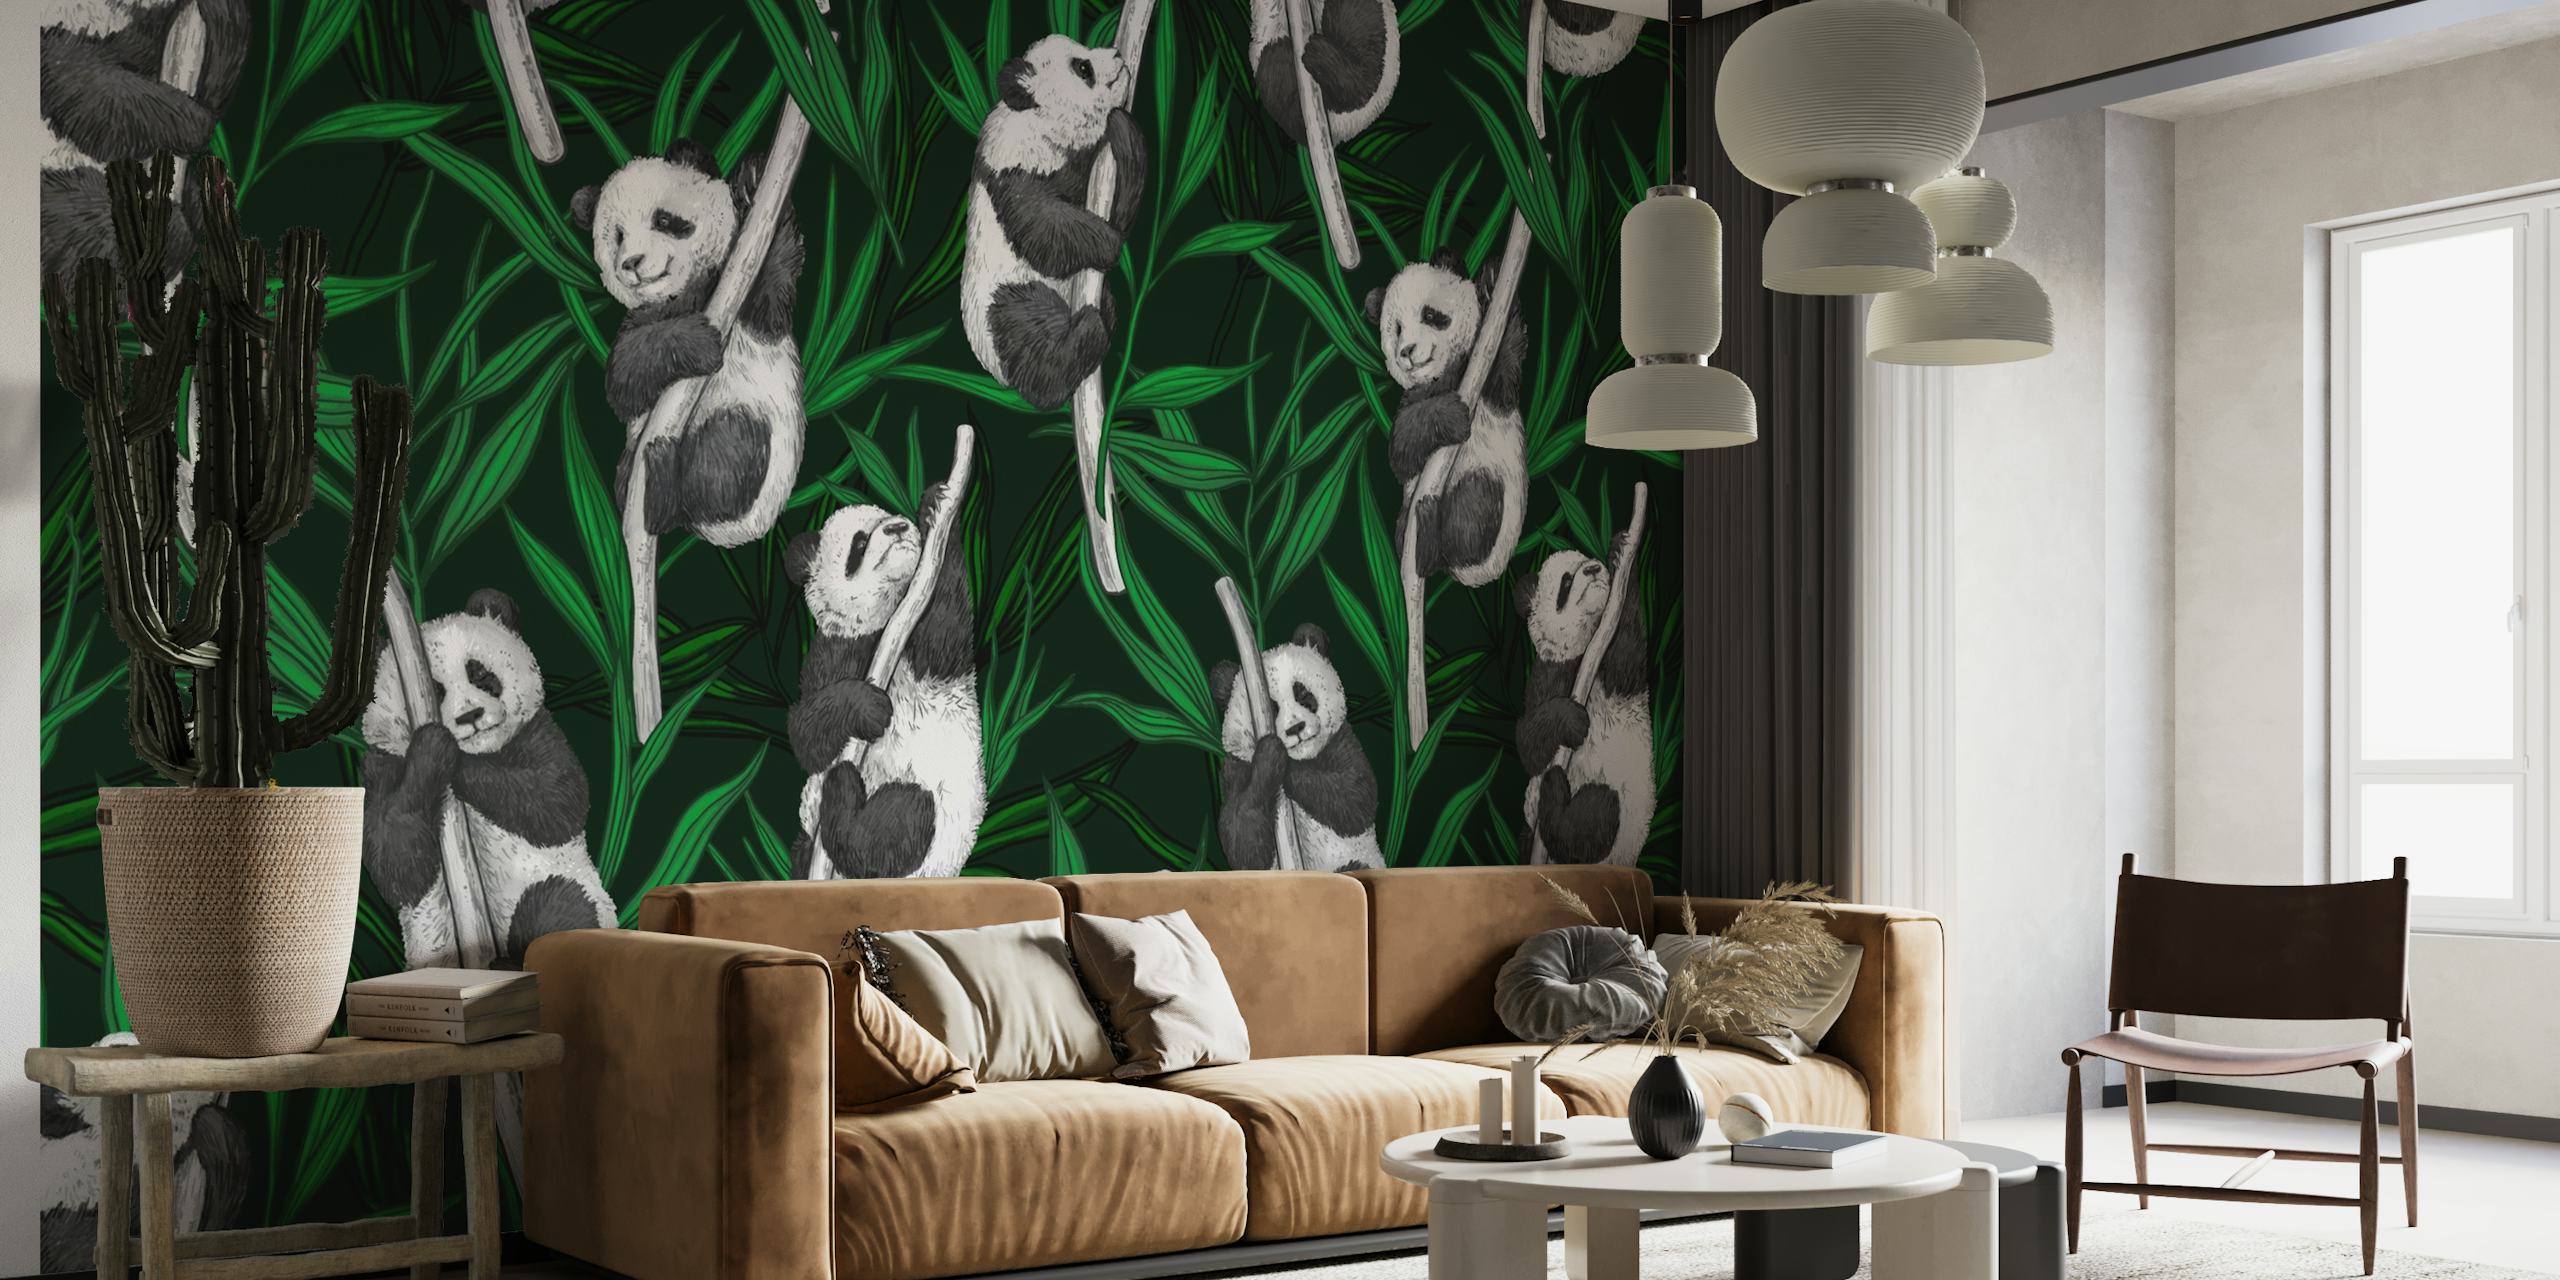 Panda cubs 3 papiers peint